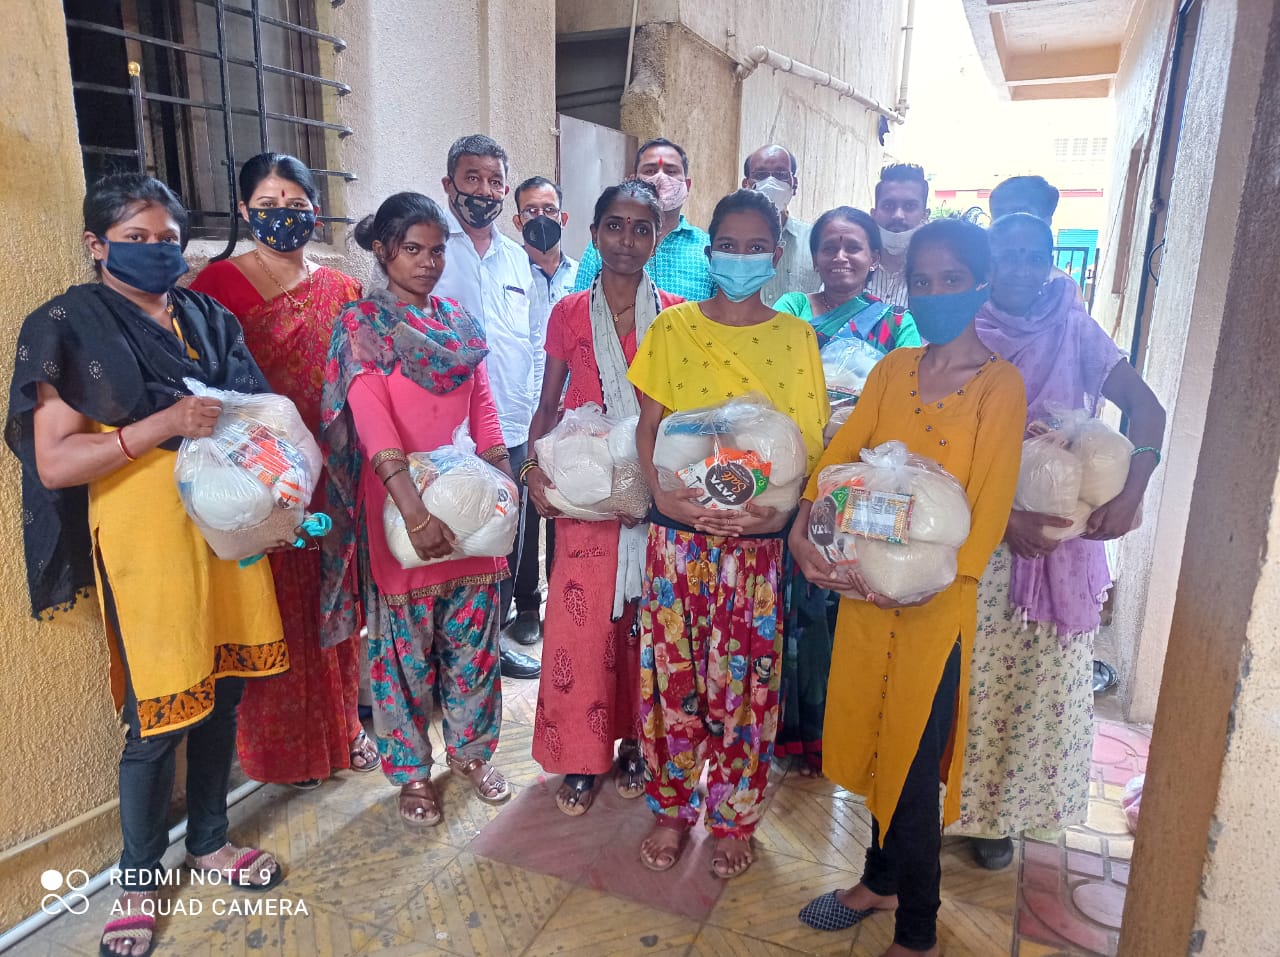 Helping hand to 30 families on behalf of Jagdamba Pratishthan and Late Babanrao Bhausaheb Kadam Pratishthan in Pimple-Gurav!